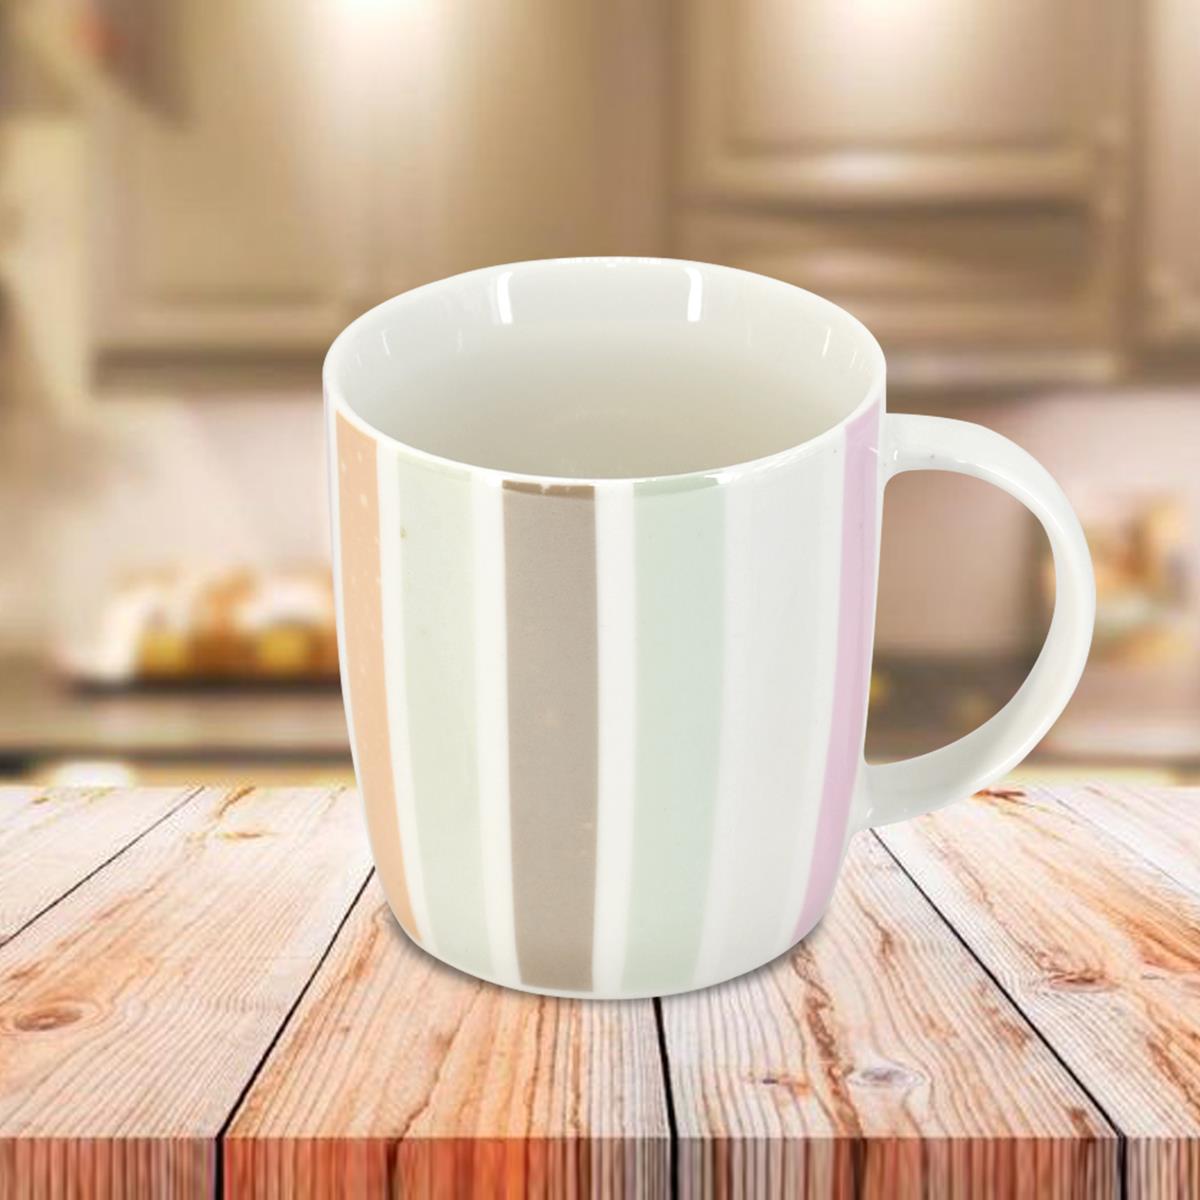 Ceramic Coffee or Tea Mug with handle - 325ml (BPM3758-A)